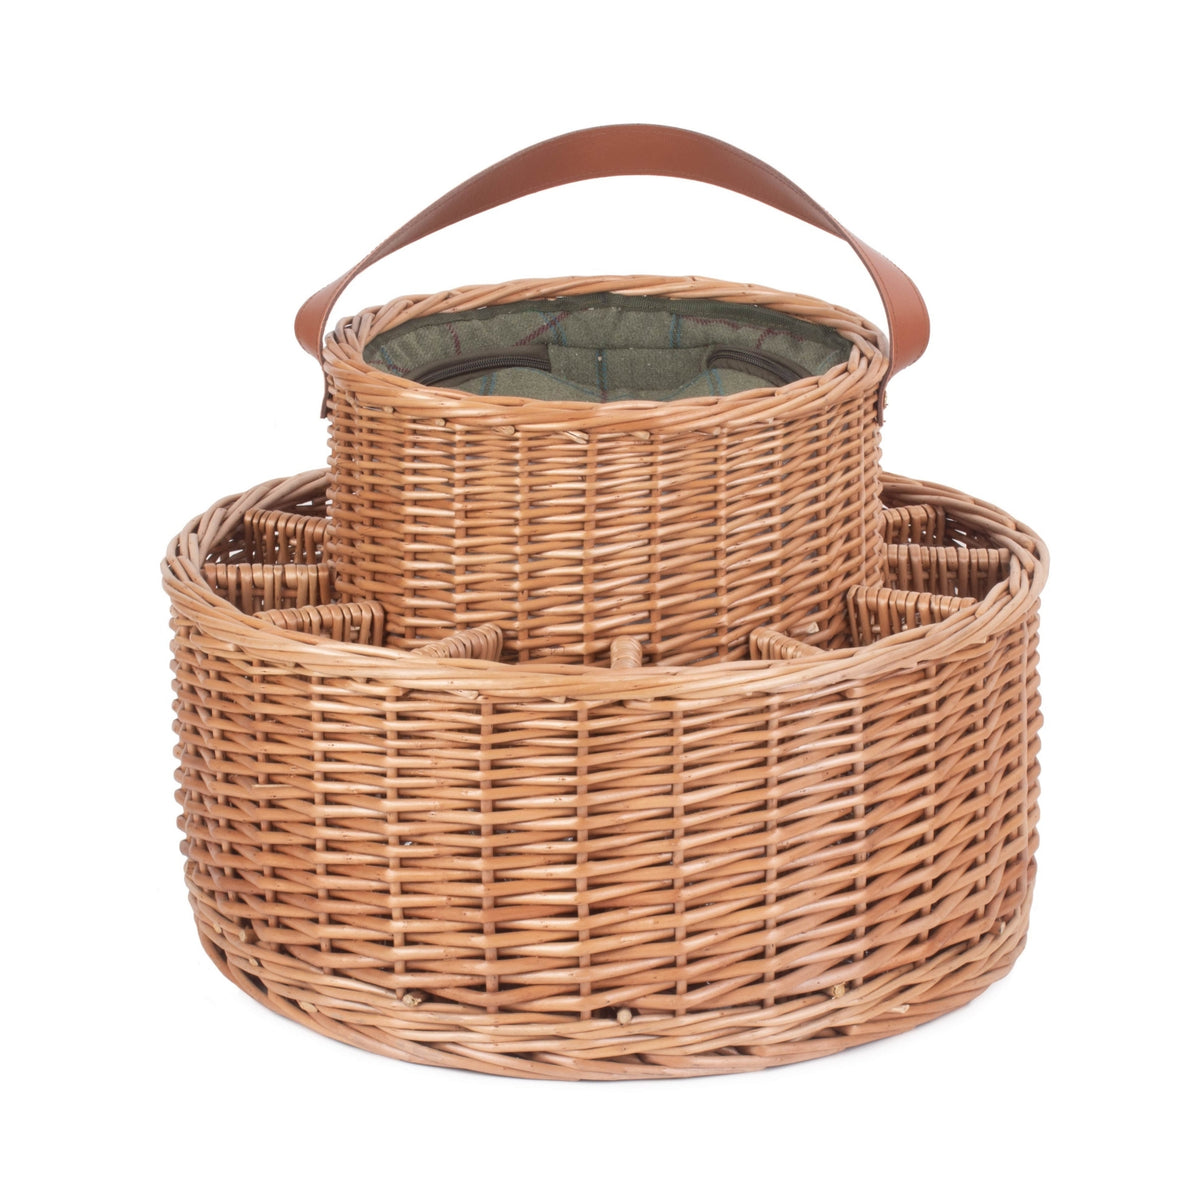 Green Tweed Chilled Wicker Garden Party Basket